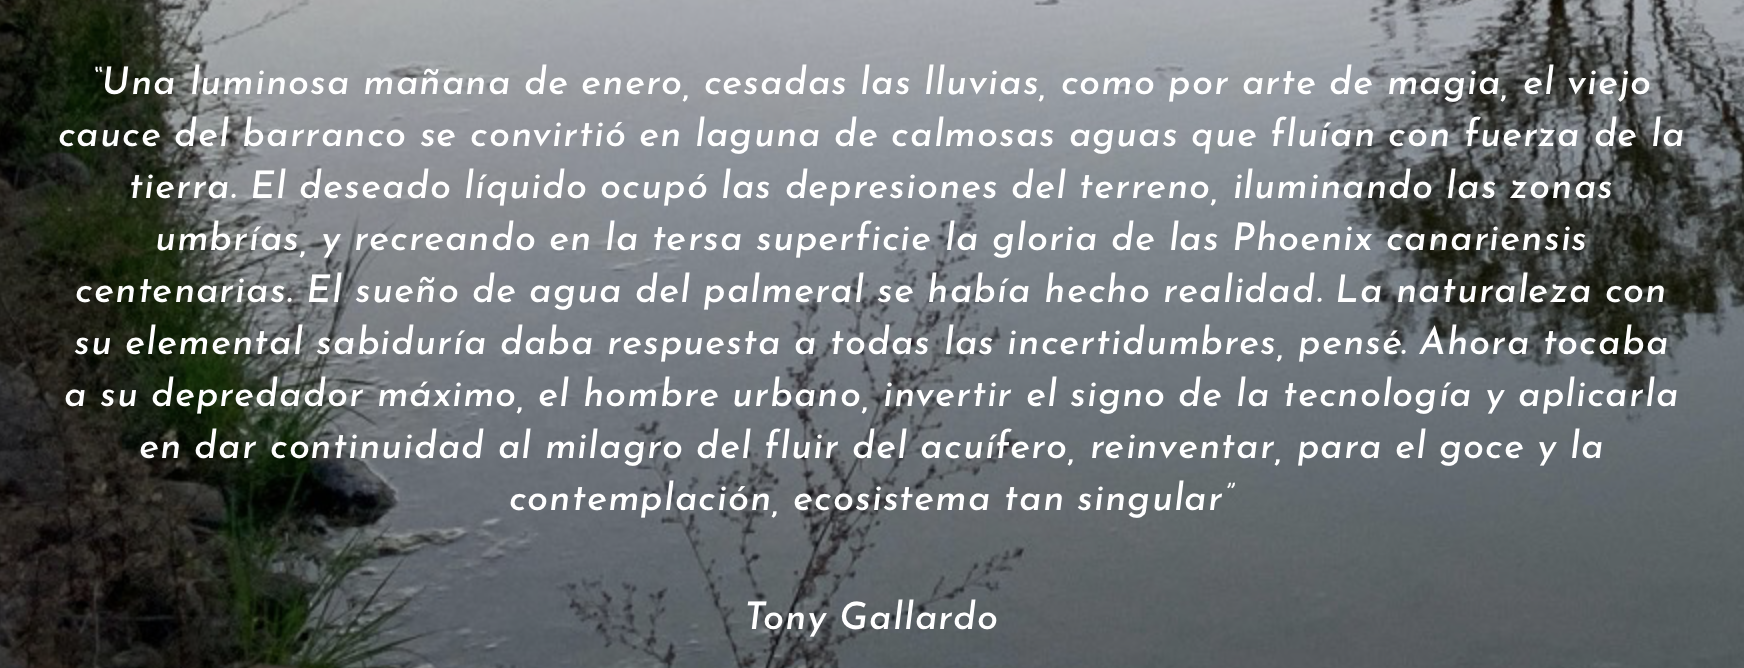 texto-tony-gallardo.png 